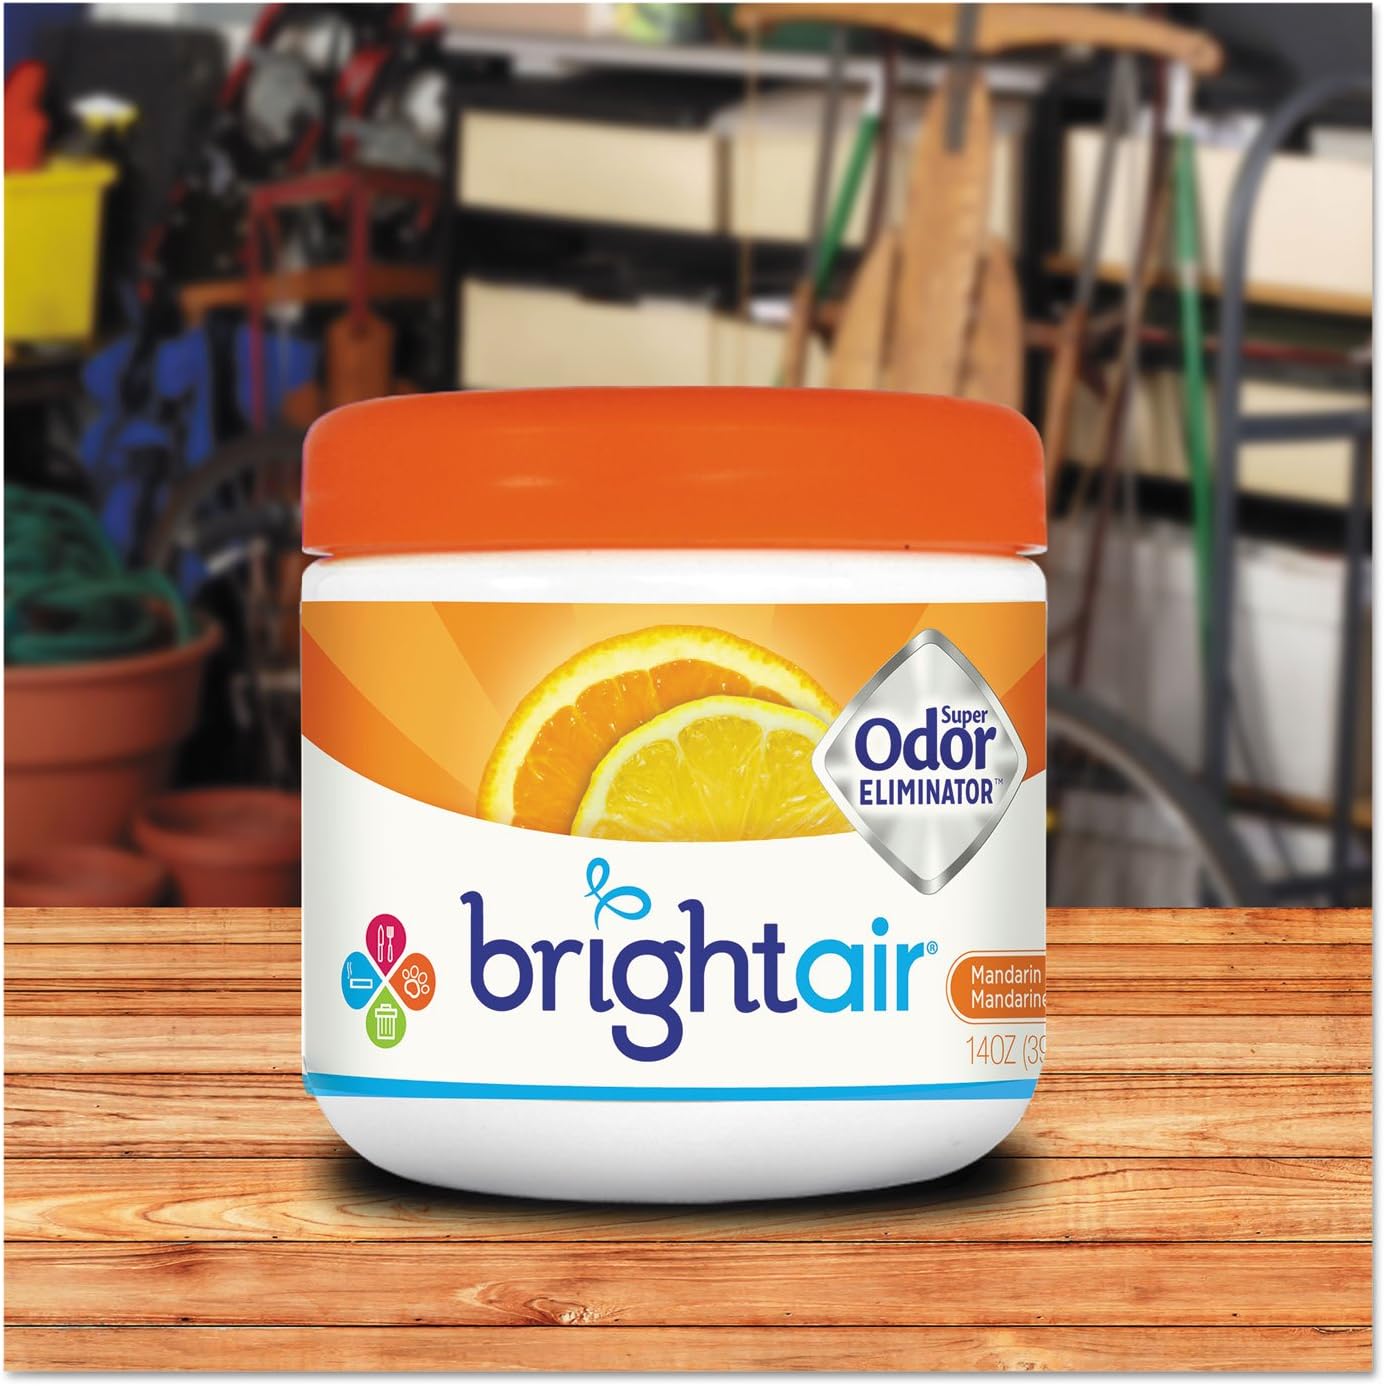 Bright Air Solid Air Freshener and Odor Eliminator, Mandarin Orange and Fresh Lemon Scent, 14 Ounces : Health & Household